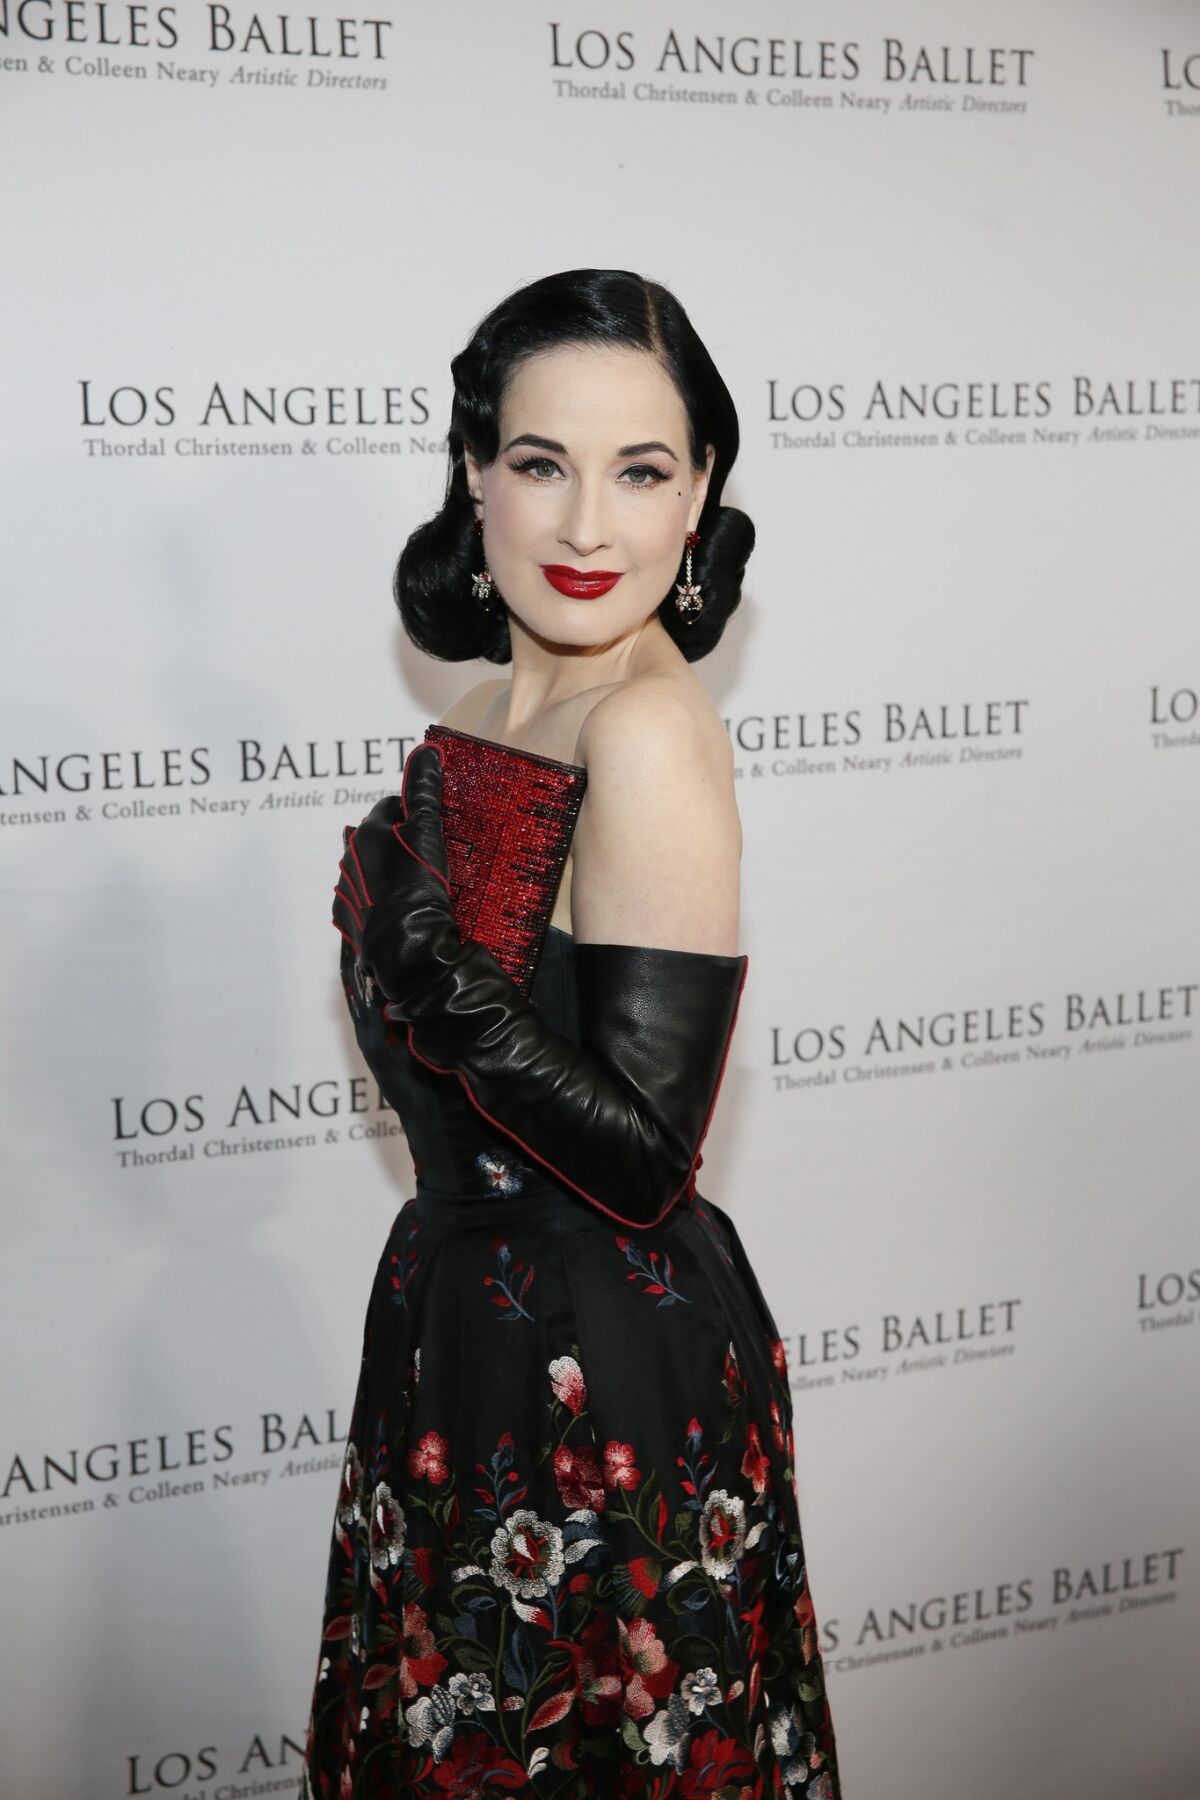 Dita Von Teese at the Los Angeles Ballet Gala.